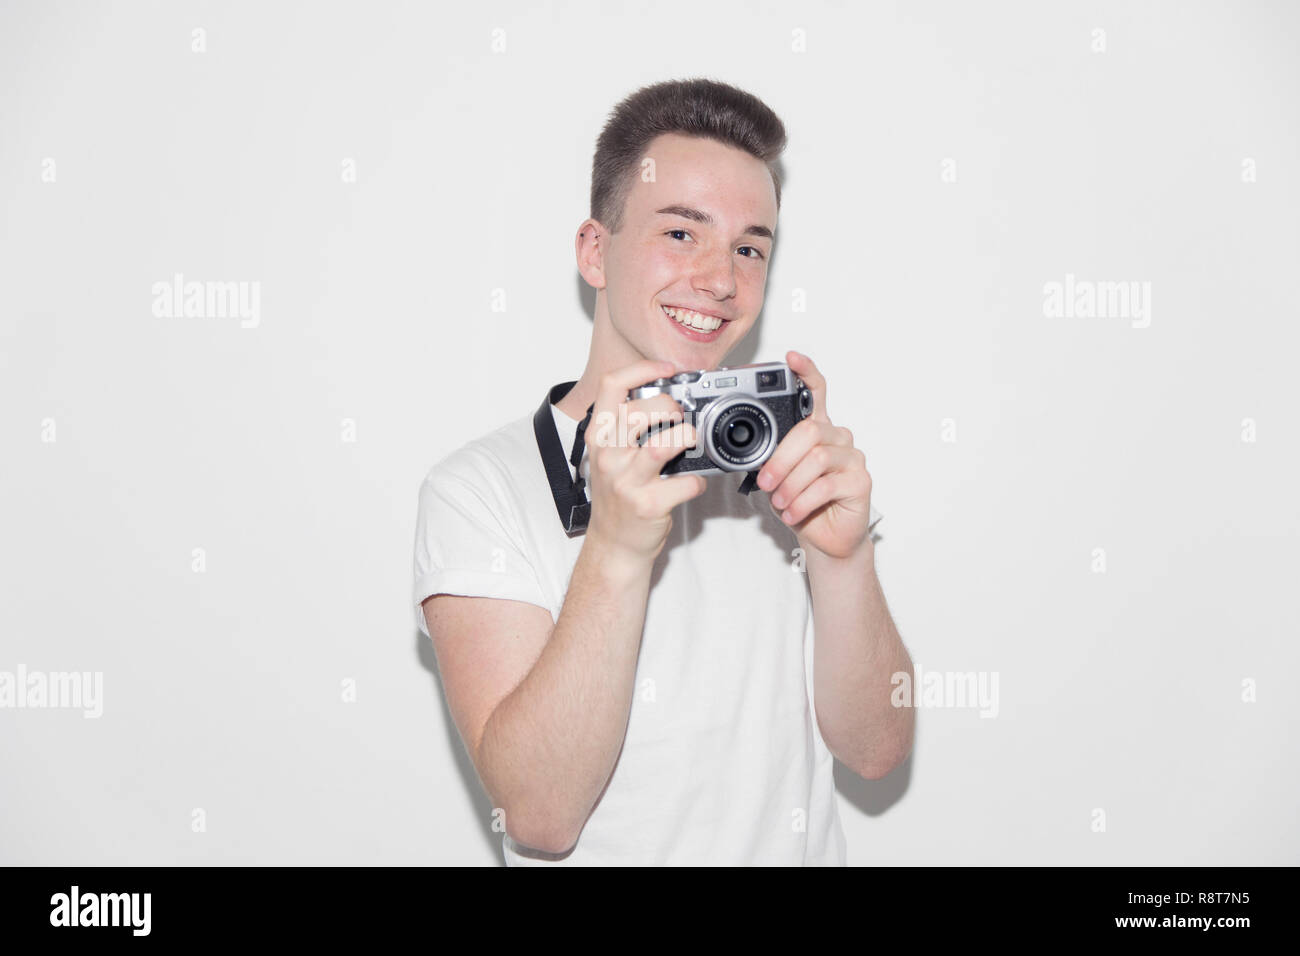 Portrait smiling, confident teenage boy with retro camera Stock Photo